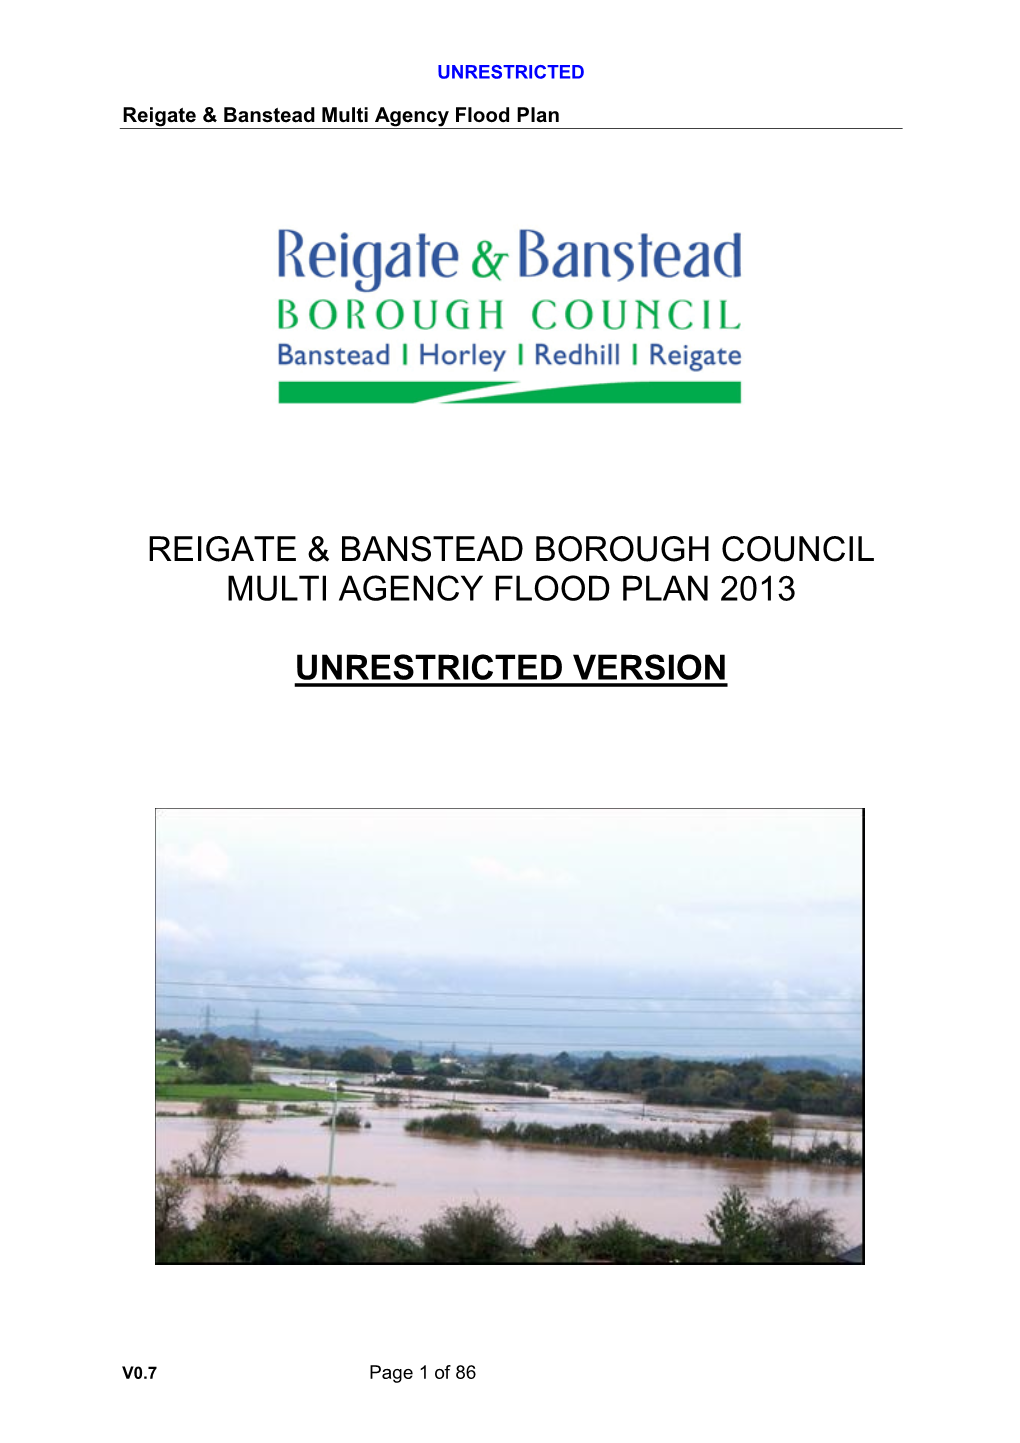 Reigate & Banstead Borough Council Multi Agency Flood Plan 2013